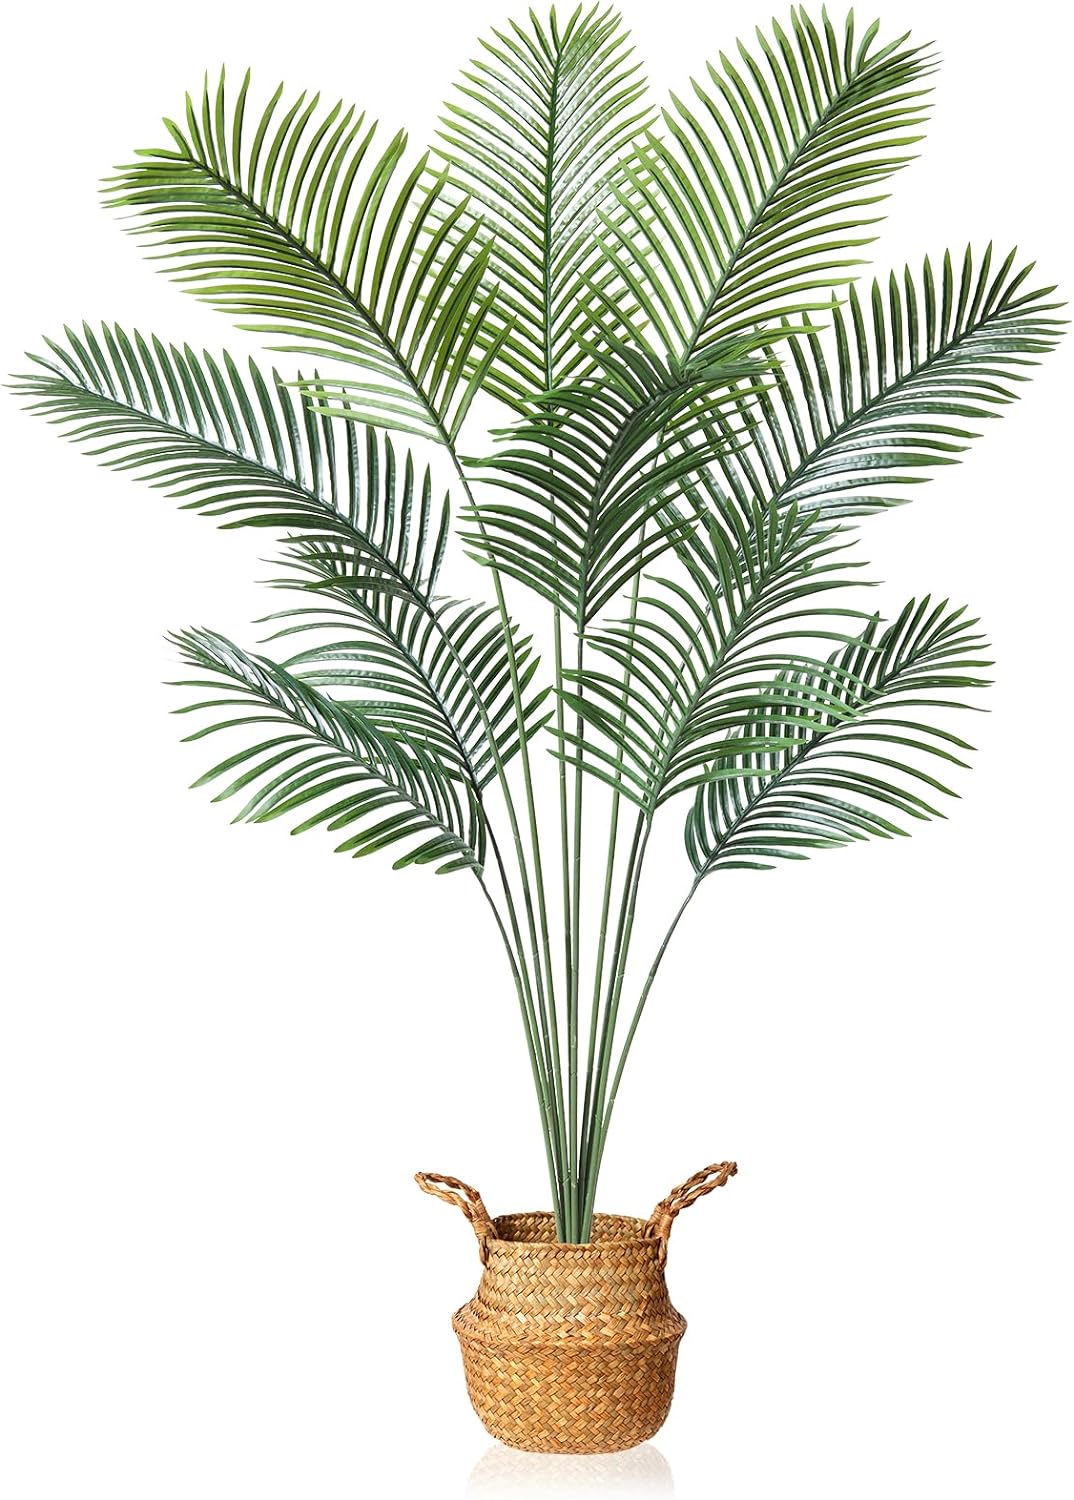 6-Foot Artificial Areca Palm in Seagrass Basket: Versatile Indoor/Outdoor Decor Accent